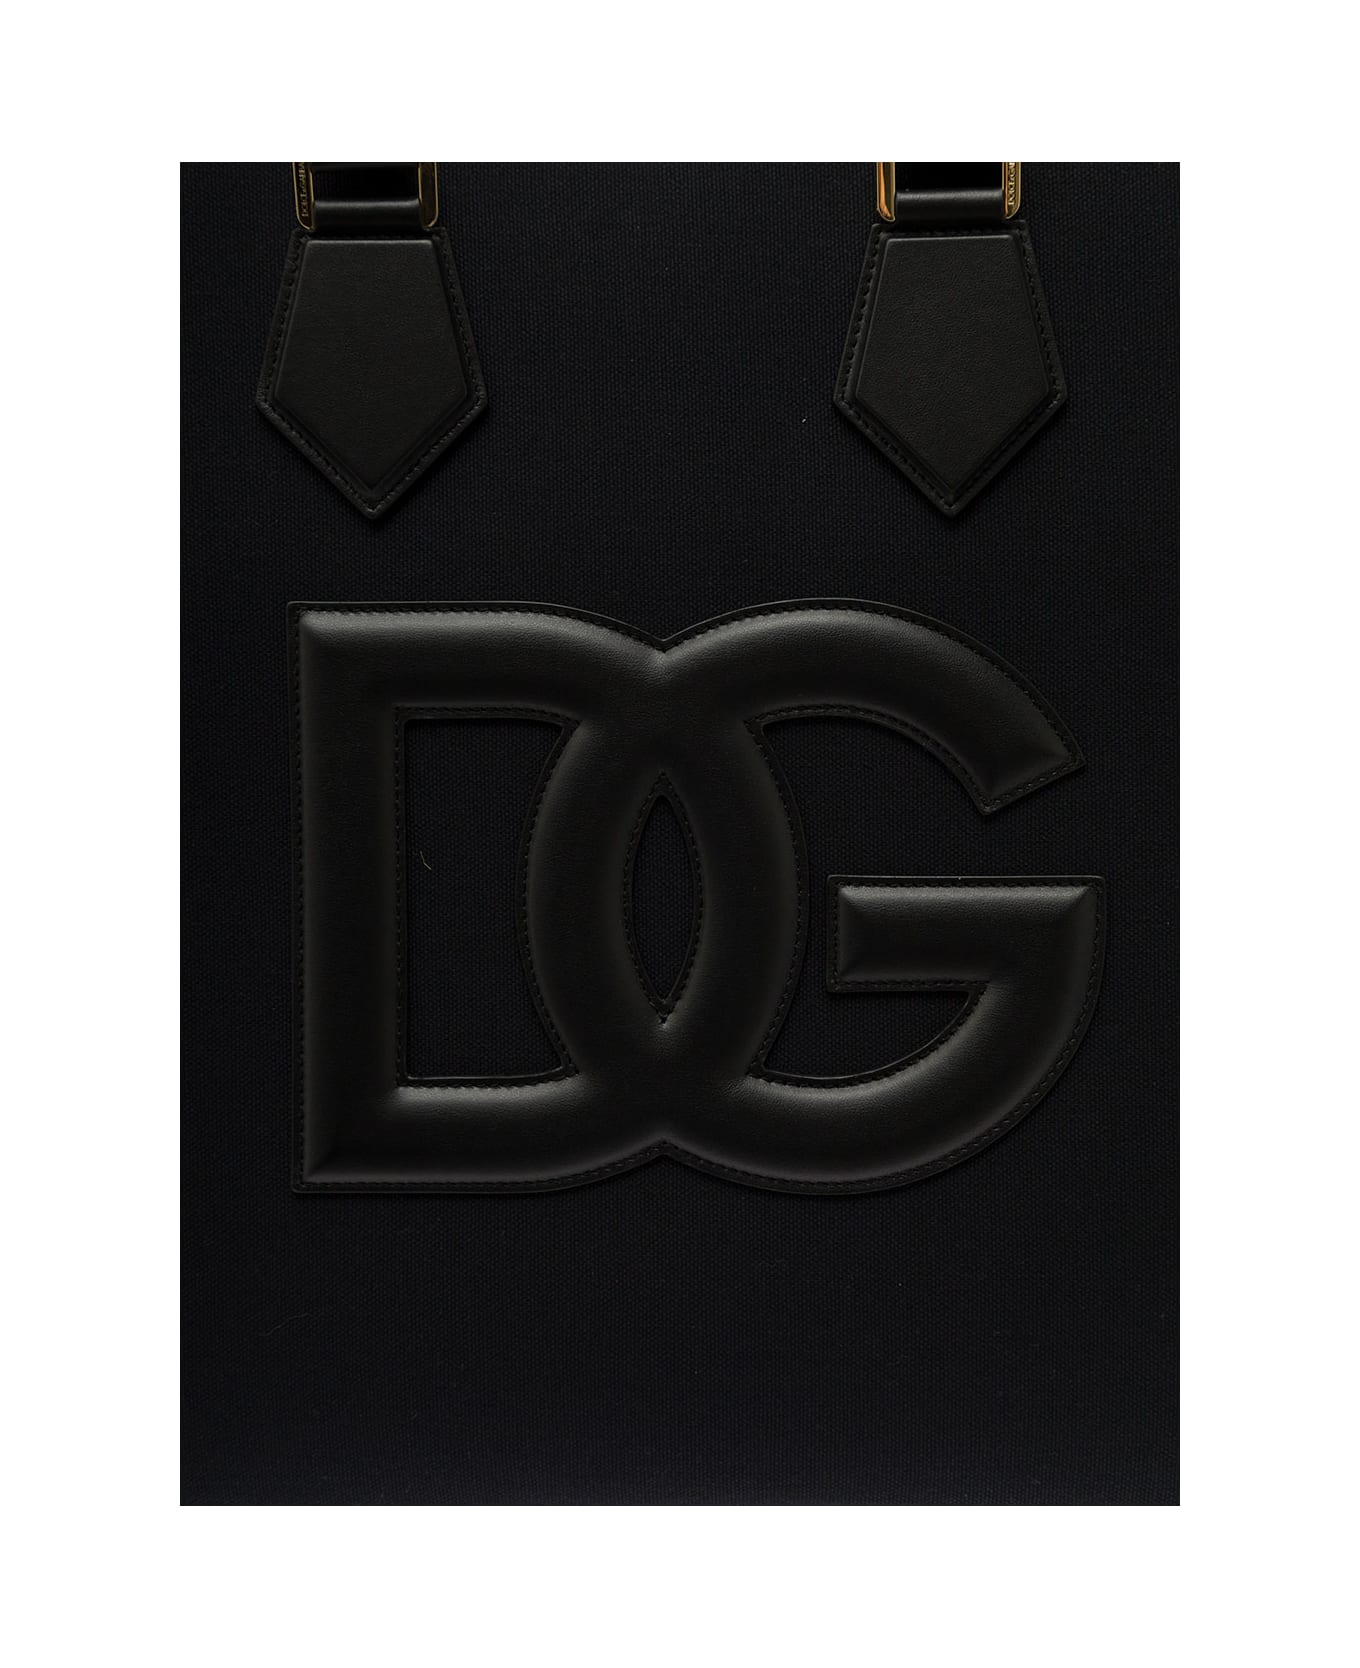 Dolce & Gabbana Shopper Canvas - Black